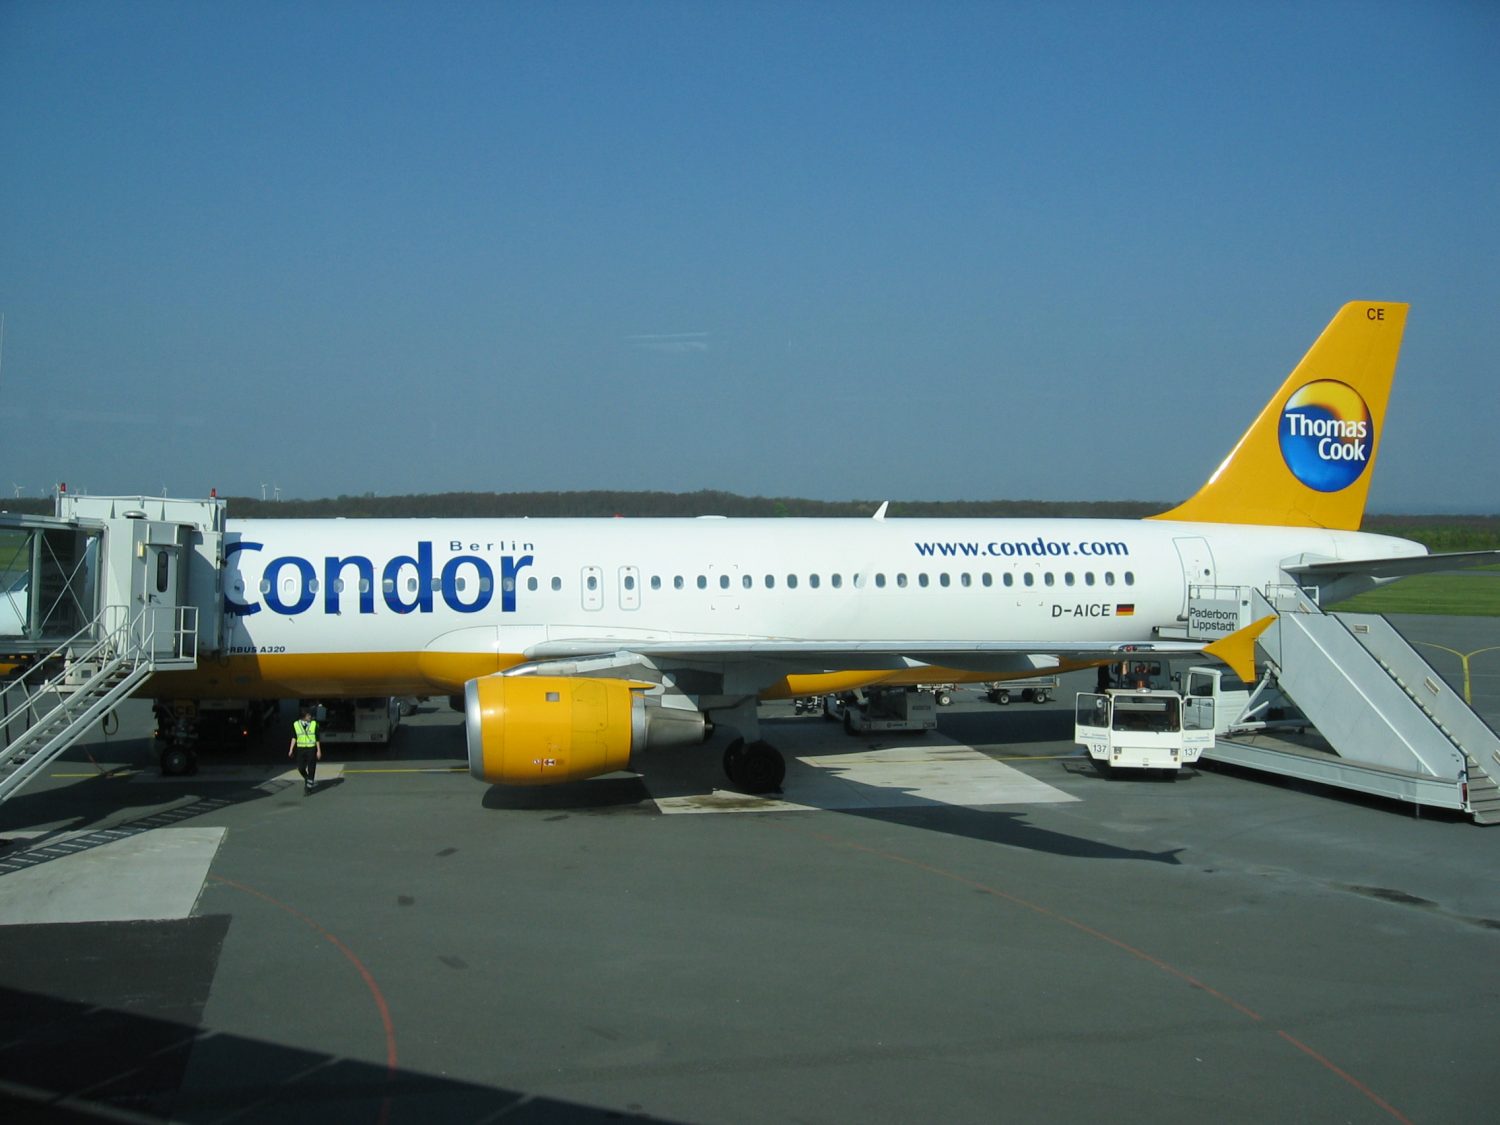 Condor-Flugzeug mit Thomas Cook Leitwerk